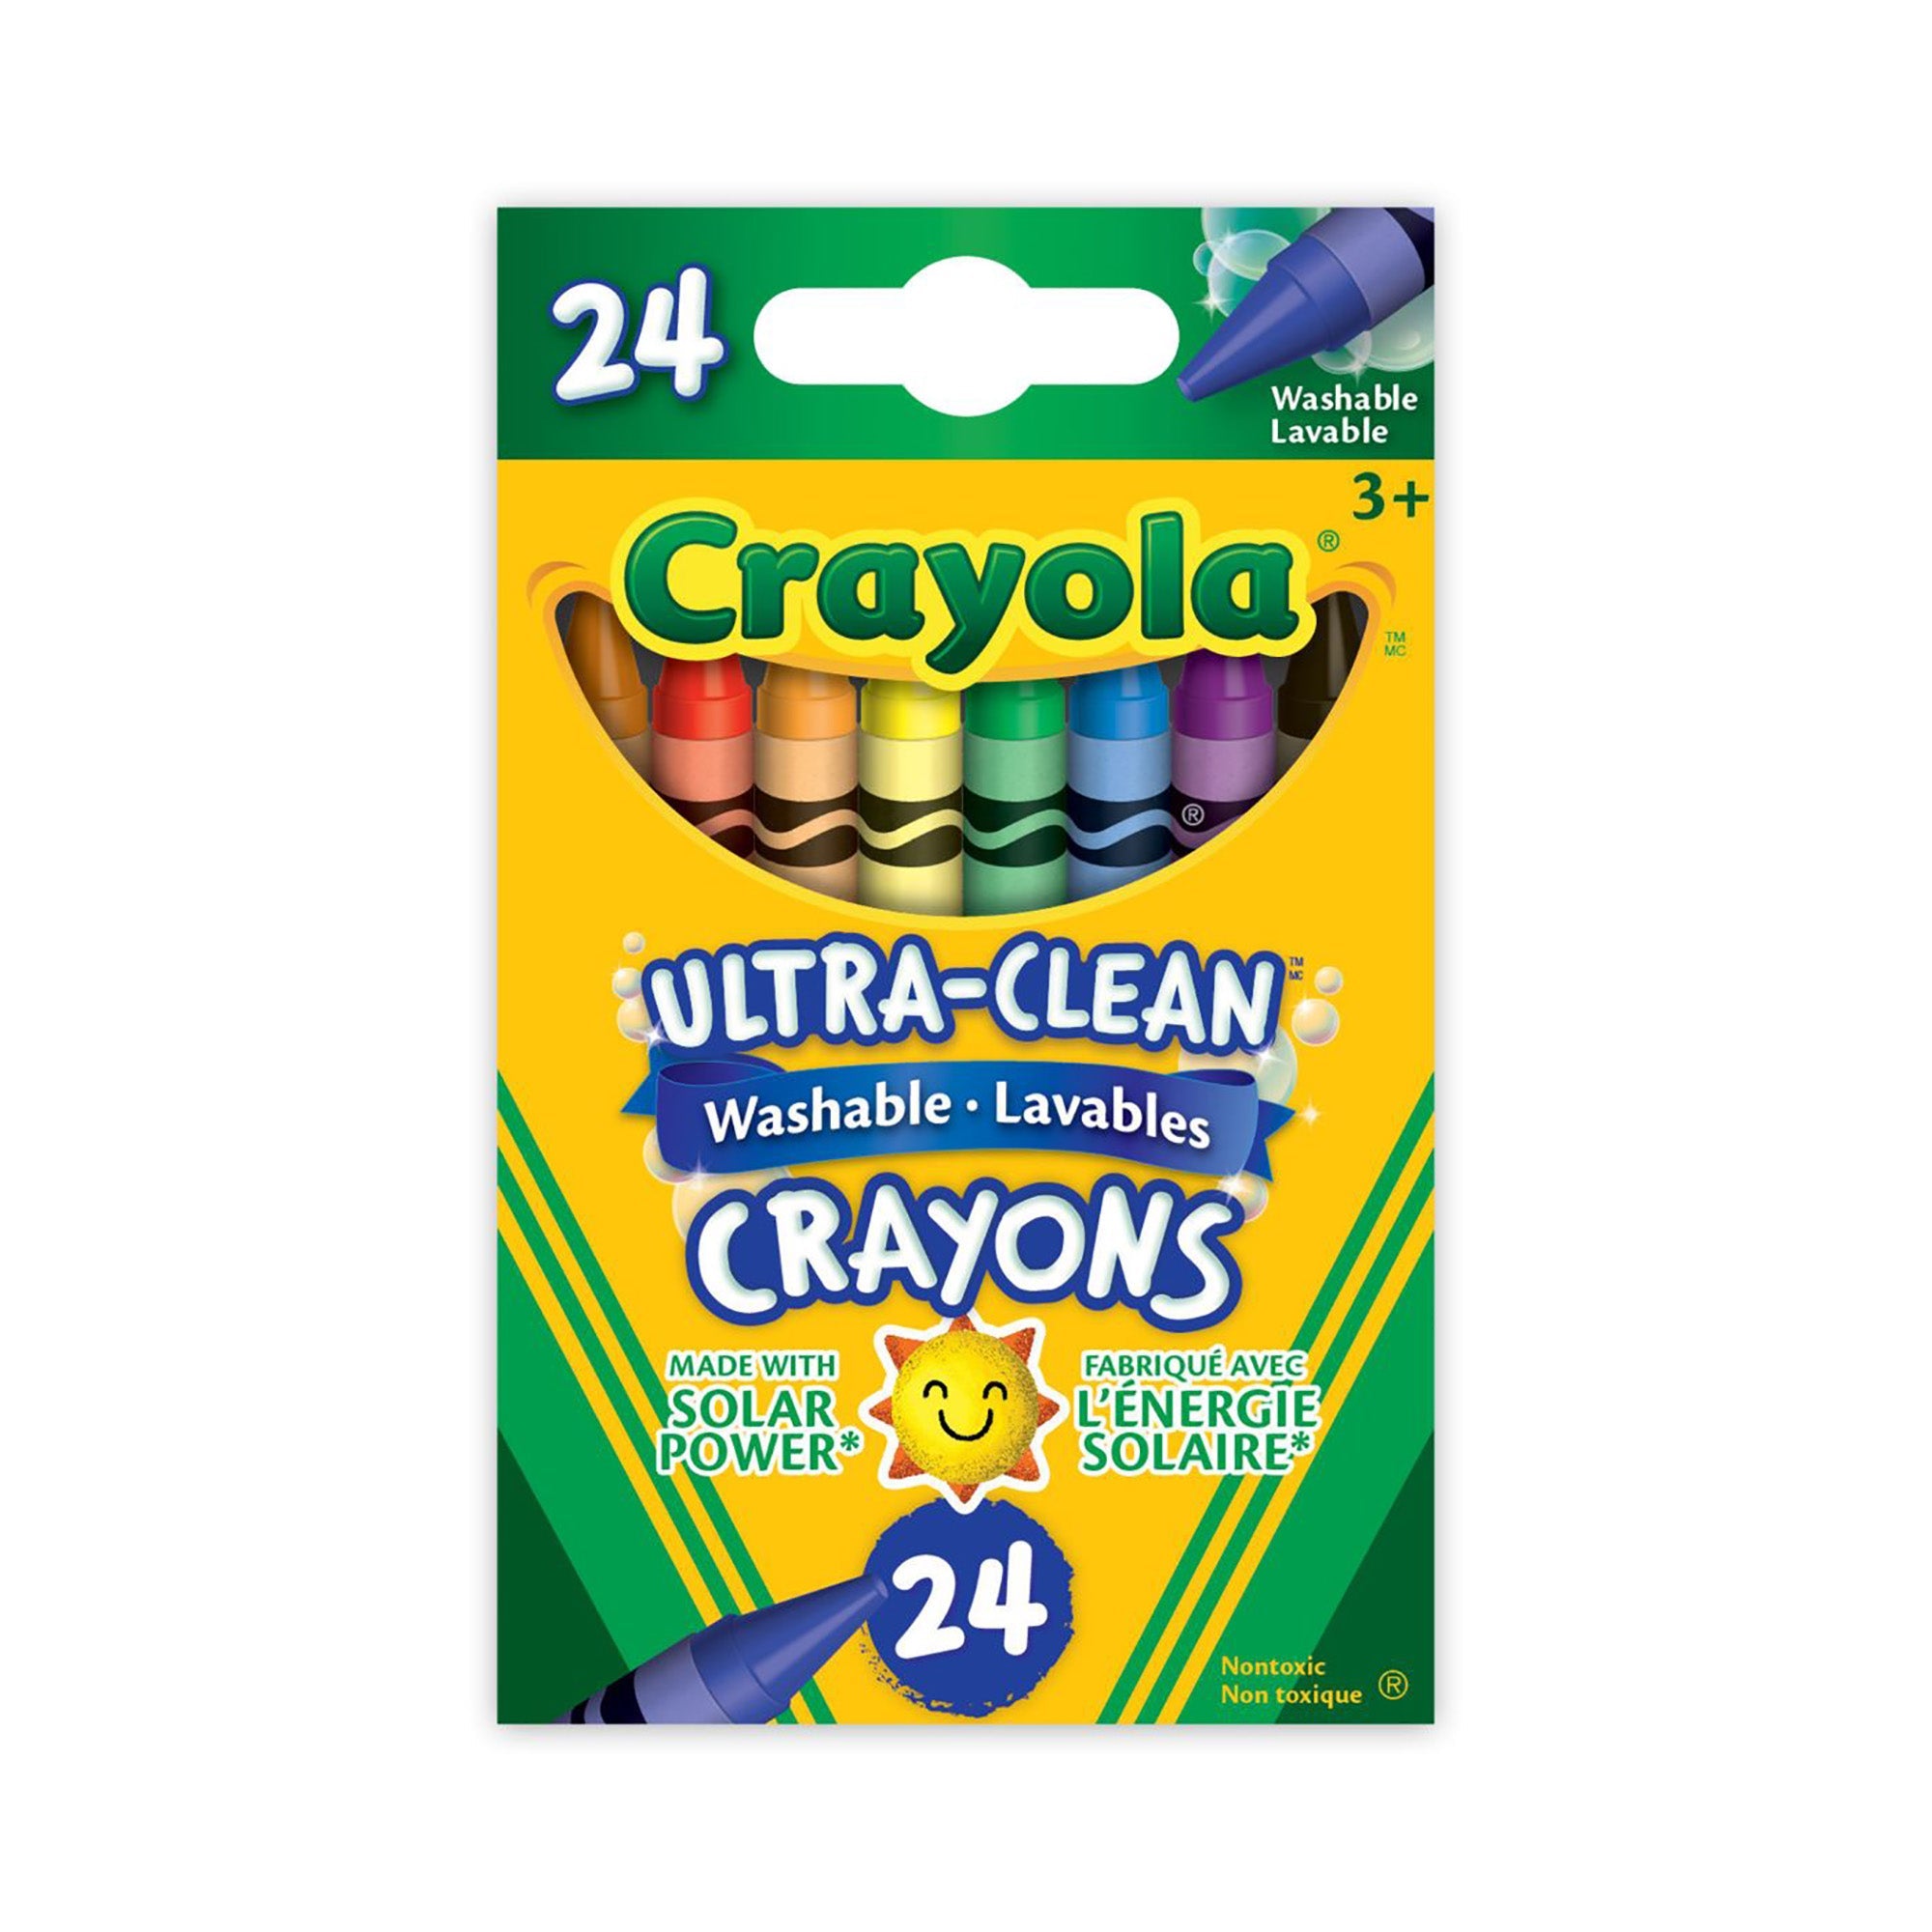 Crayola Ultra Clean 24 Crayons - Washable - Non-toxic